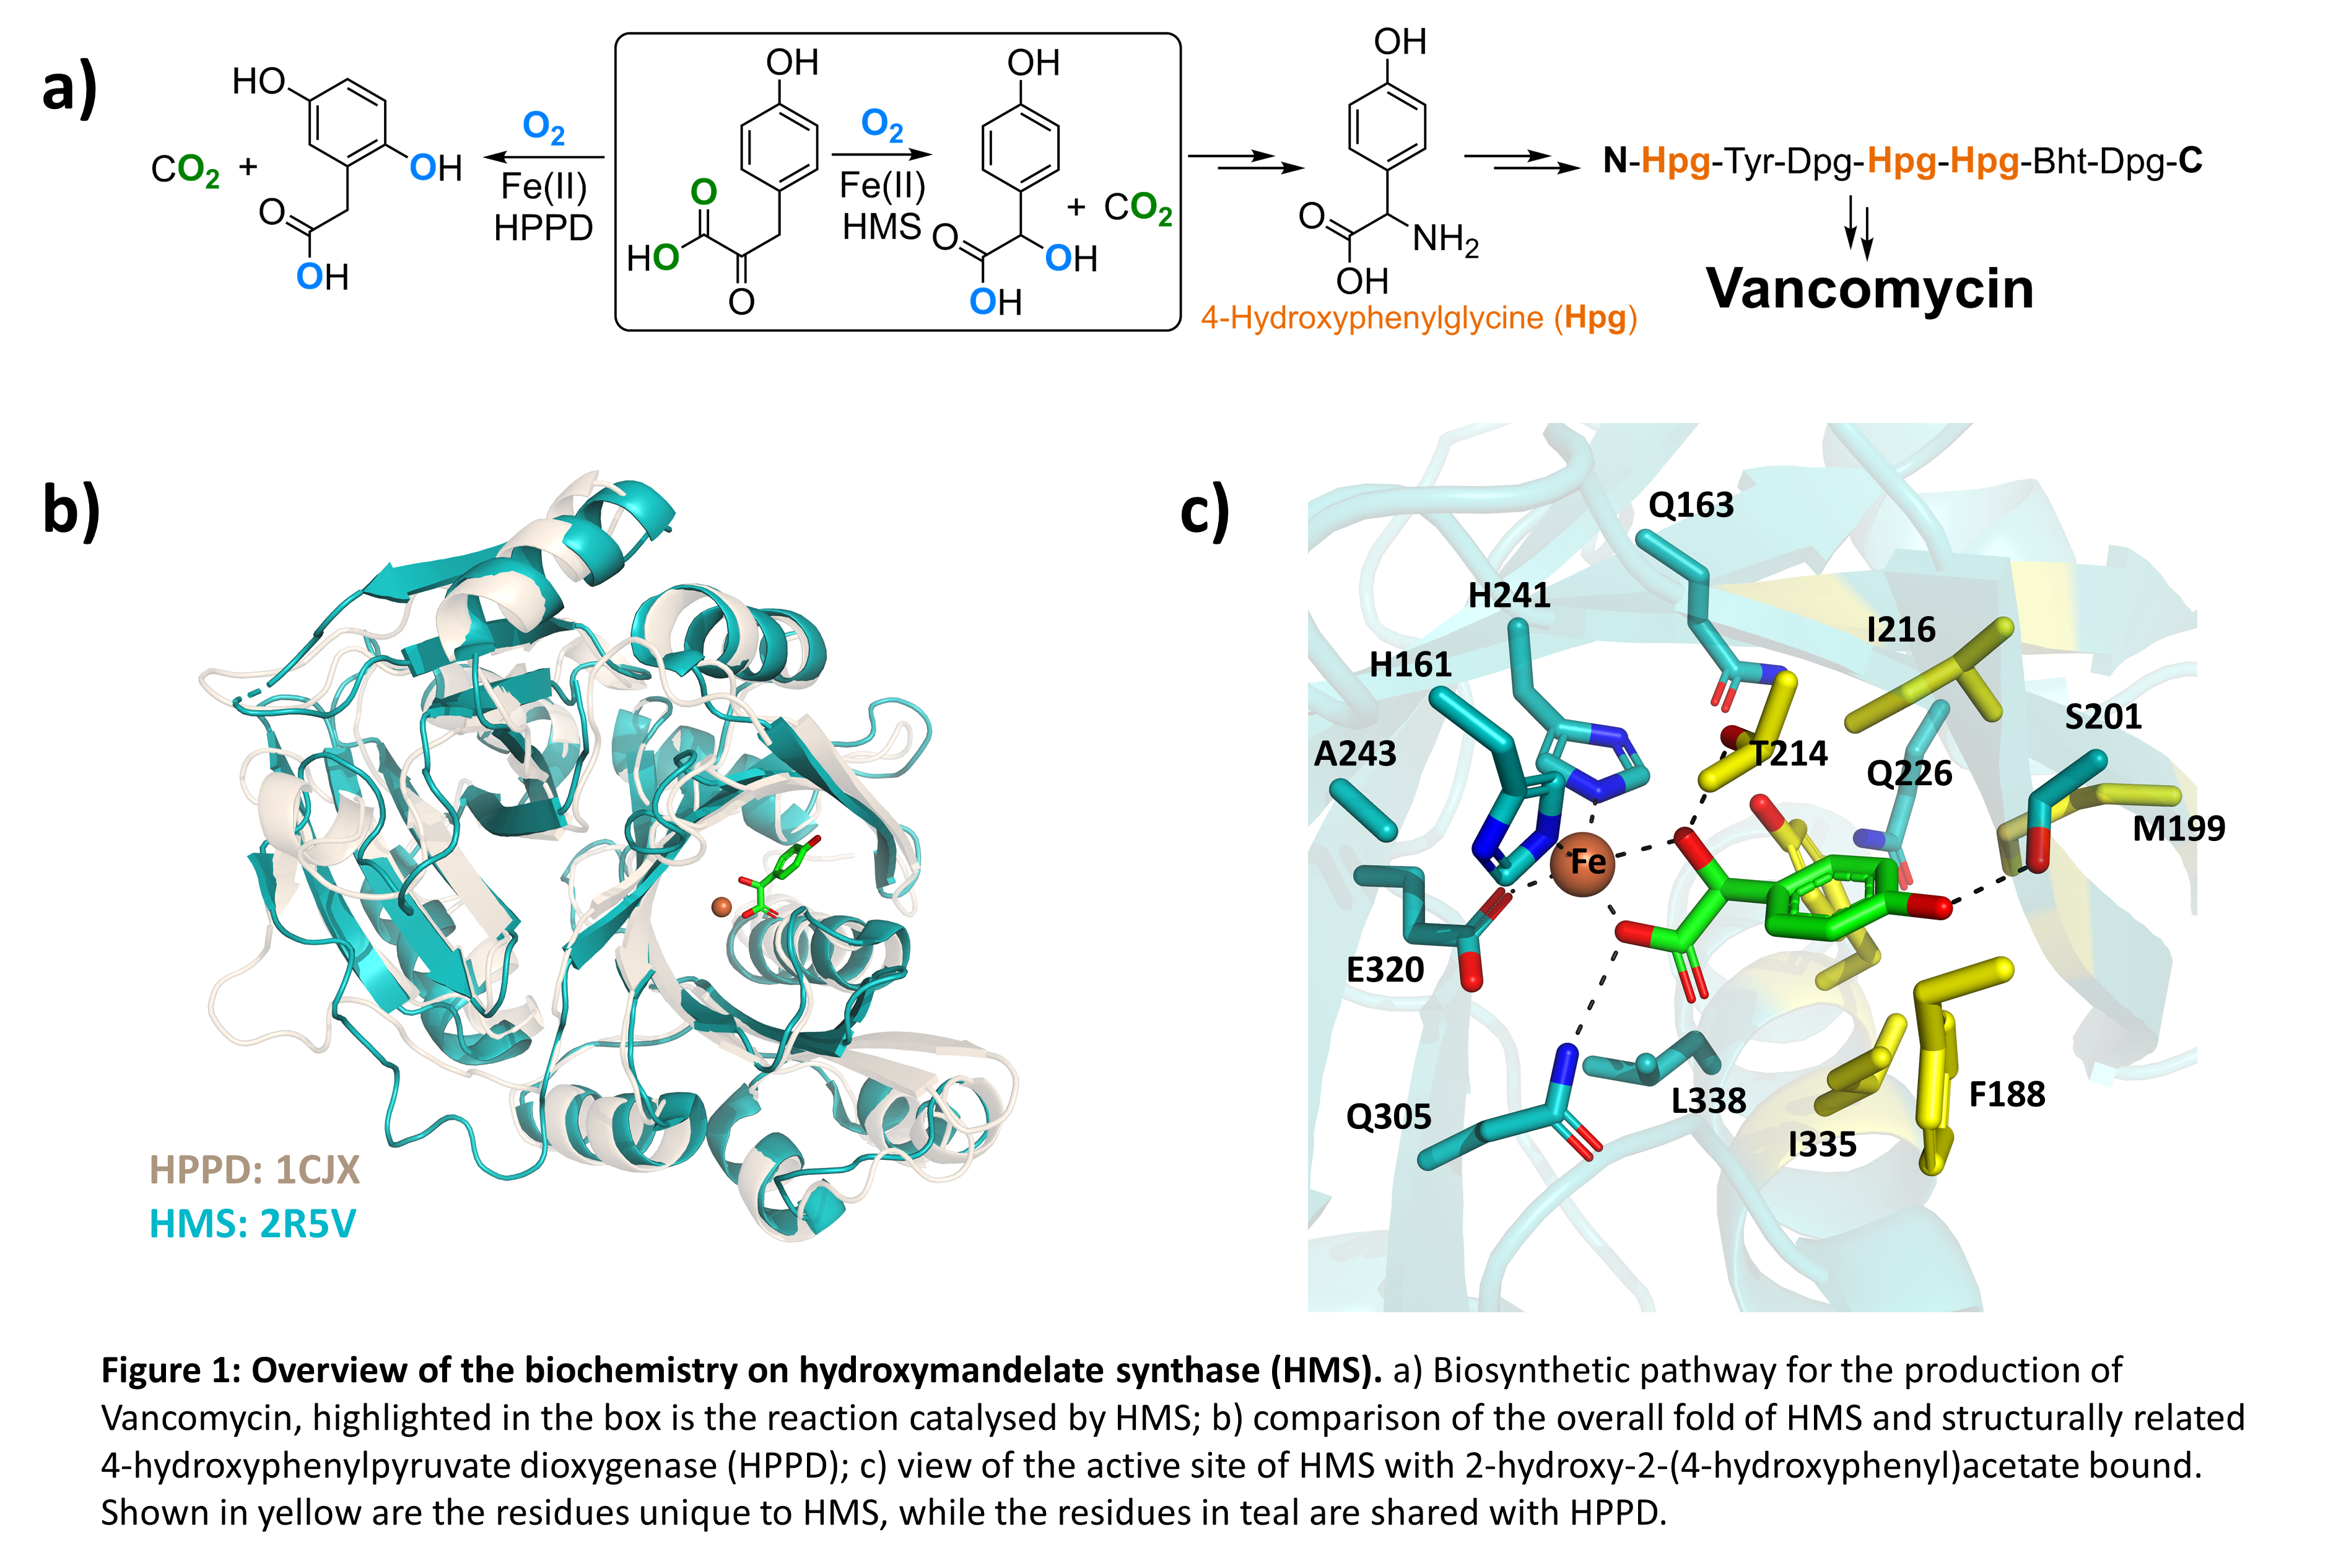 Overview of the biochemistry on hydroxymandelate synthase (HMS)